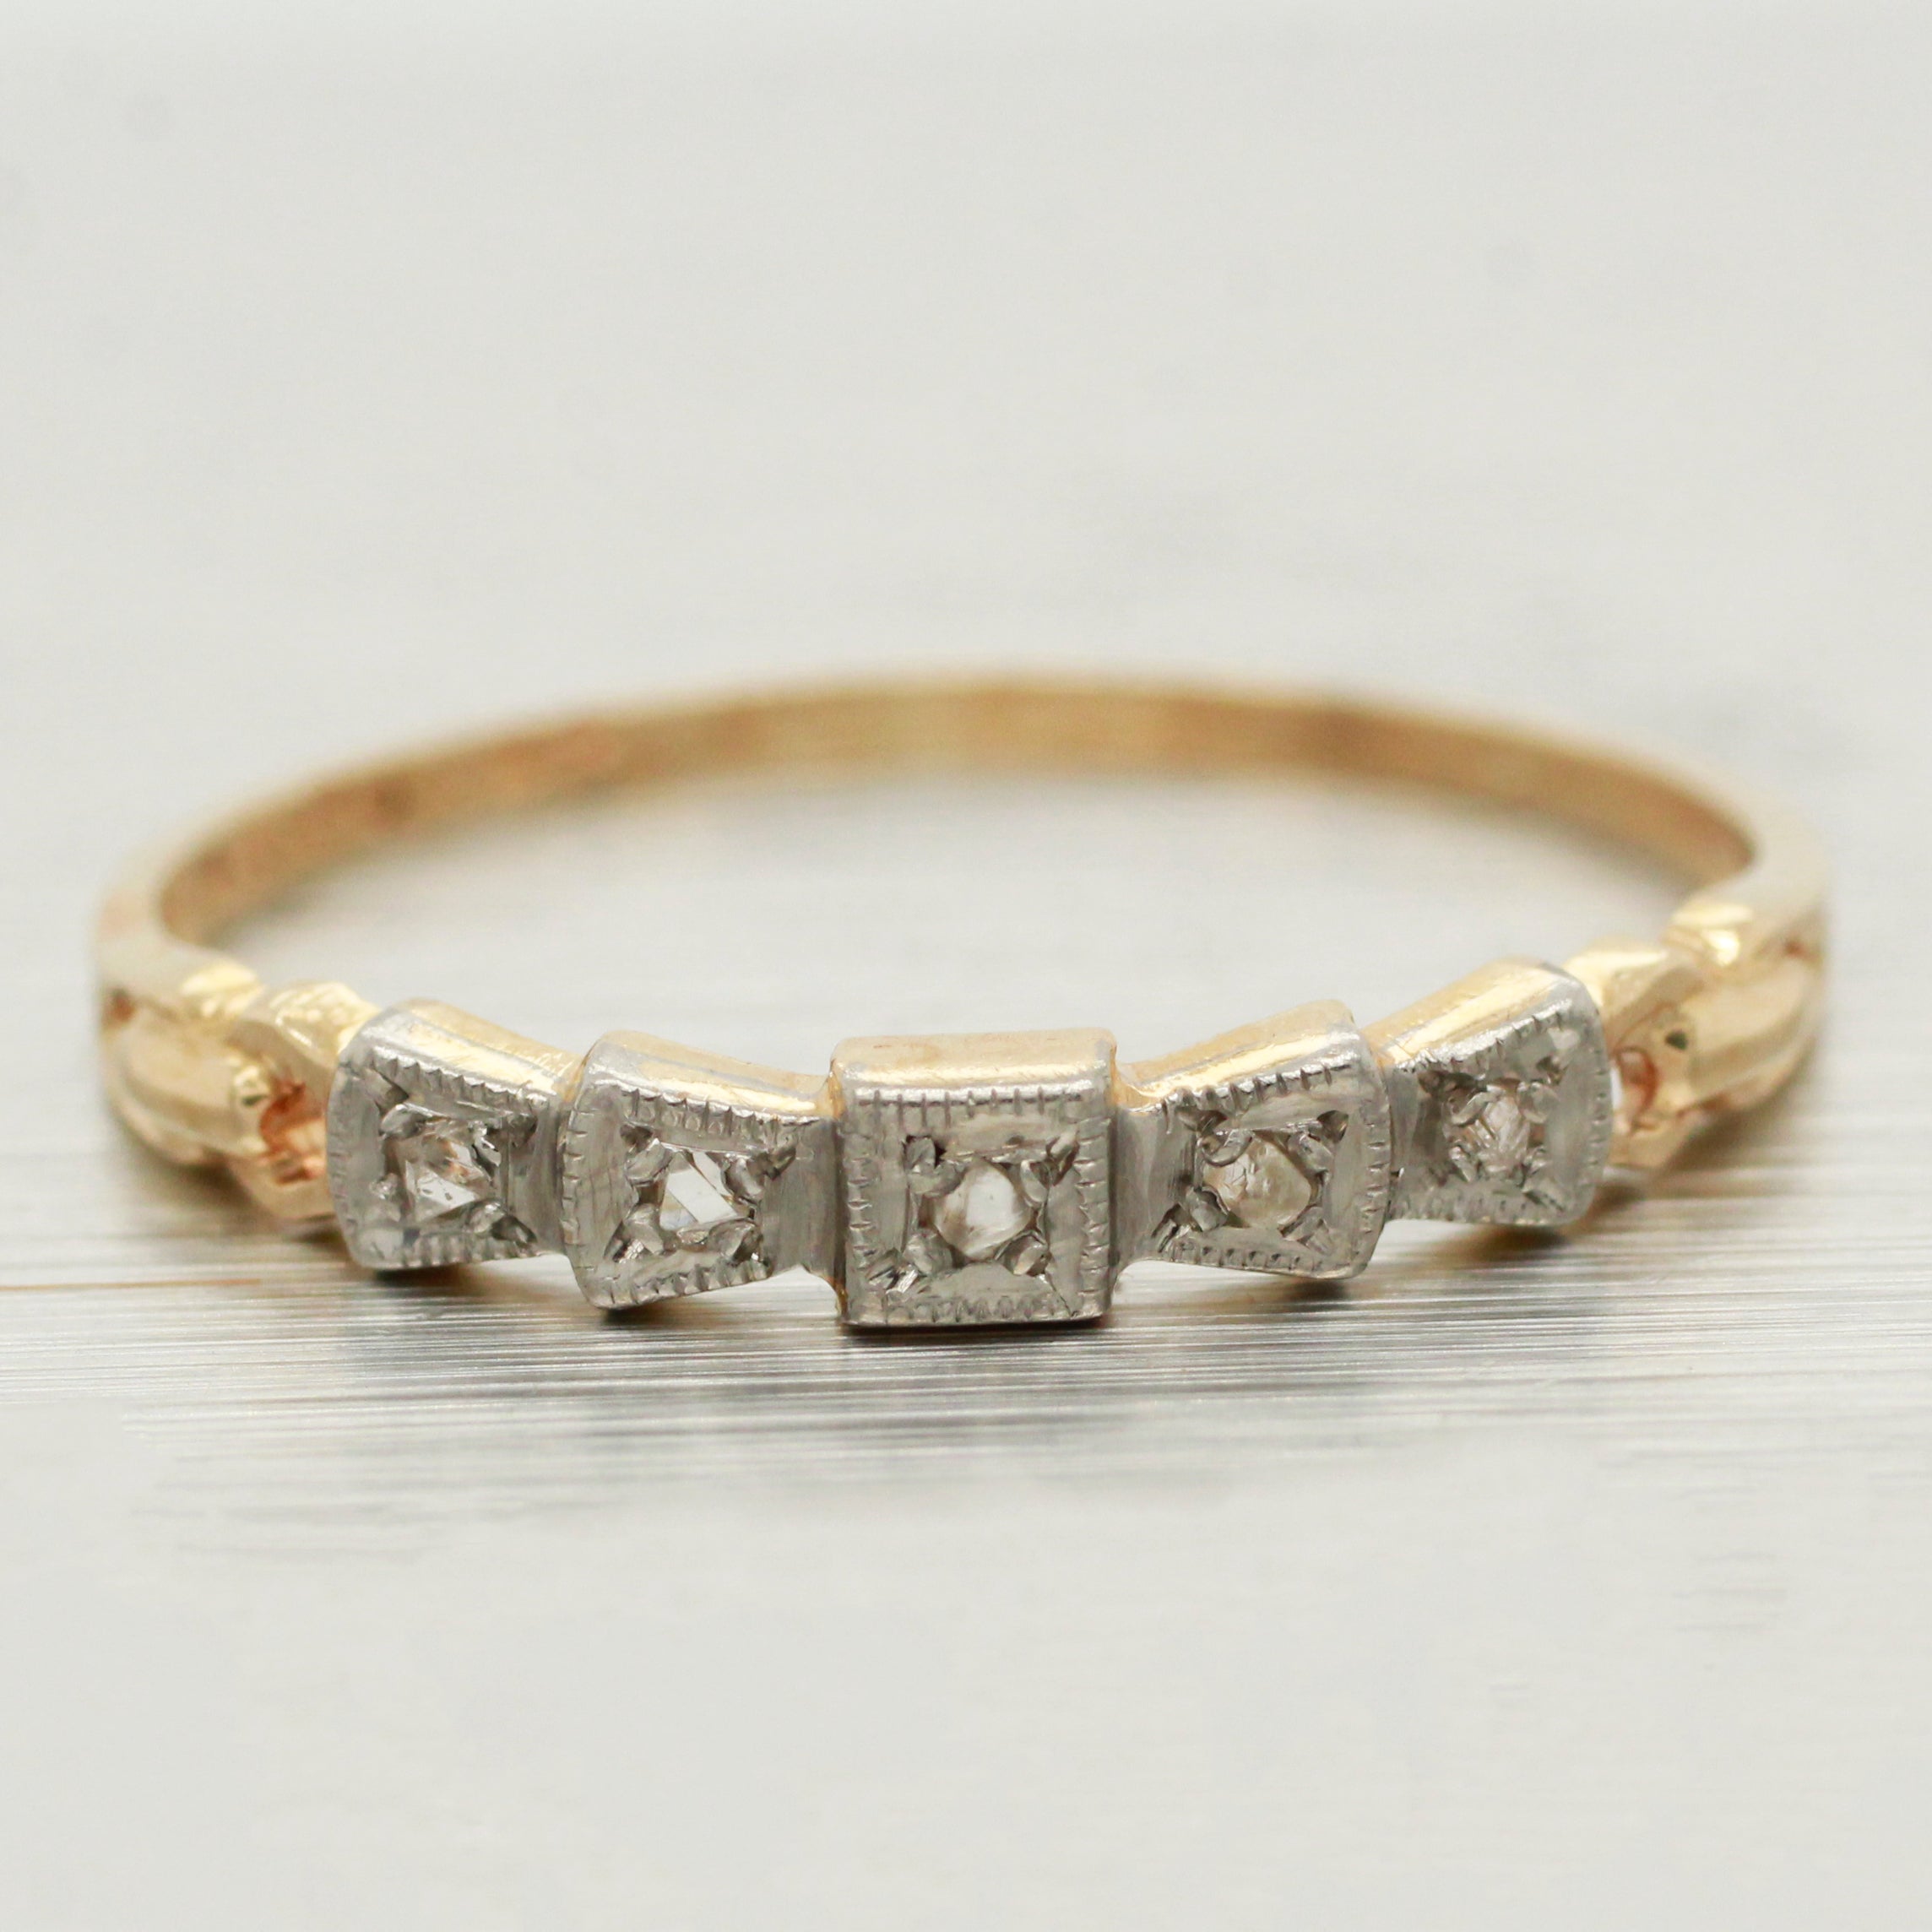 Antique Art Deco Thin Diamond Ring - 14k Yellow Gold Band - Size 6.50